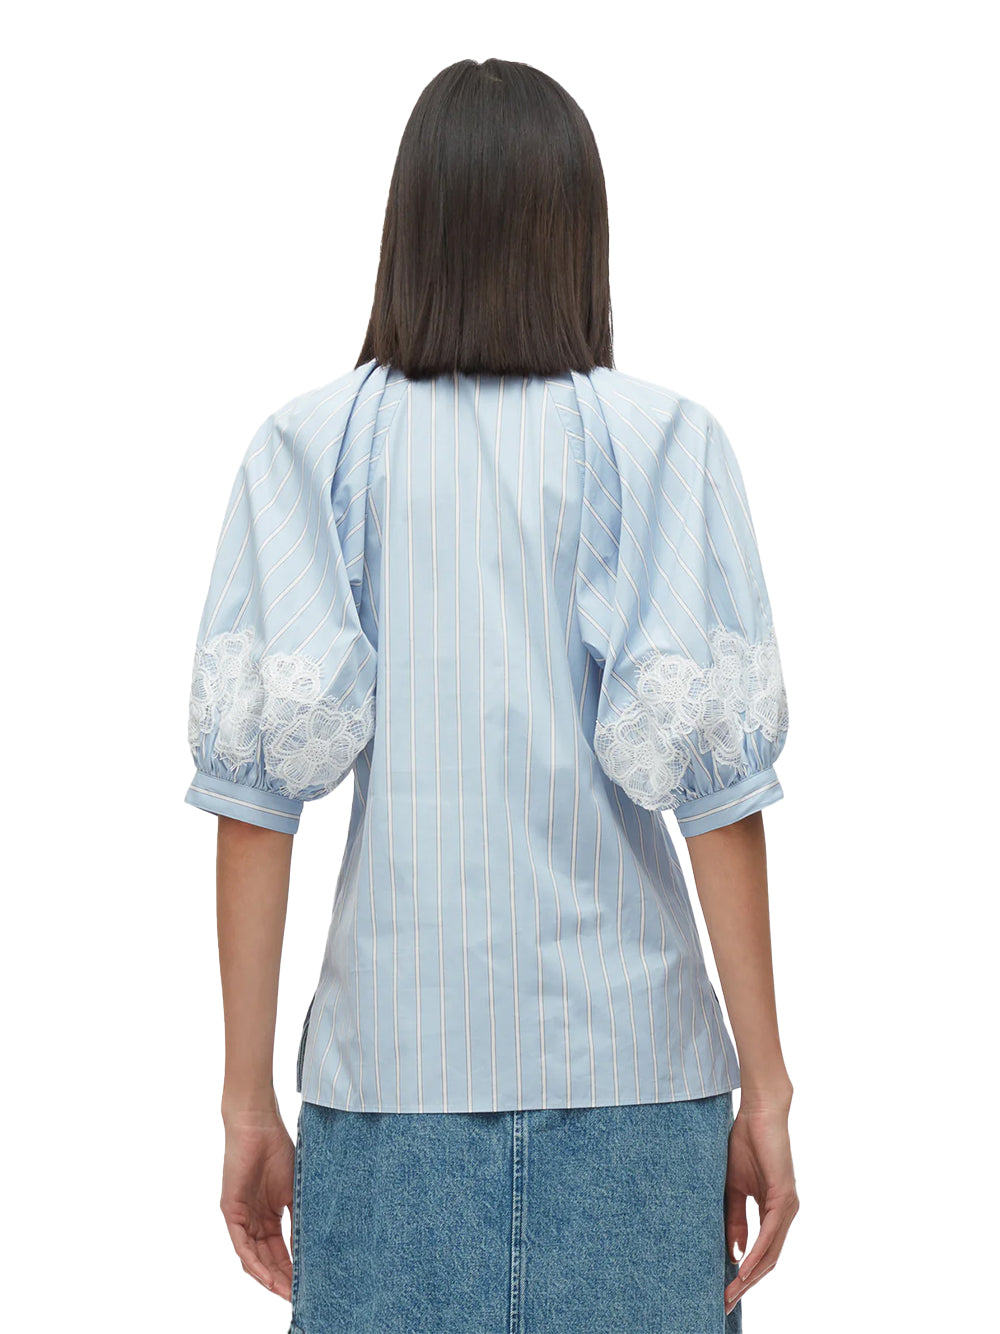 Lantern Sleeve Stripe Shirt with Lace (Oxford Blue Multi)